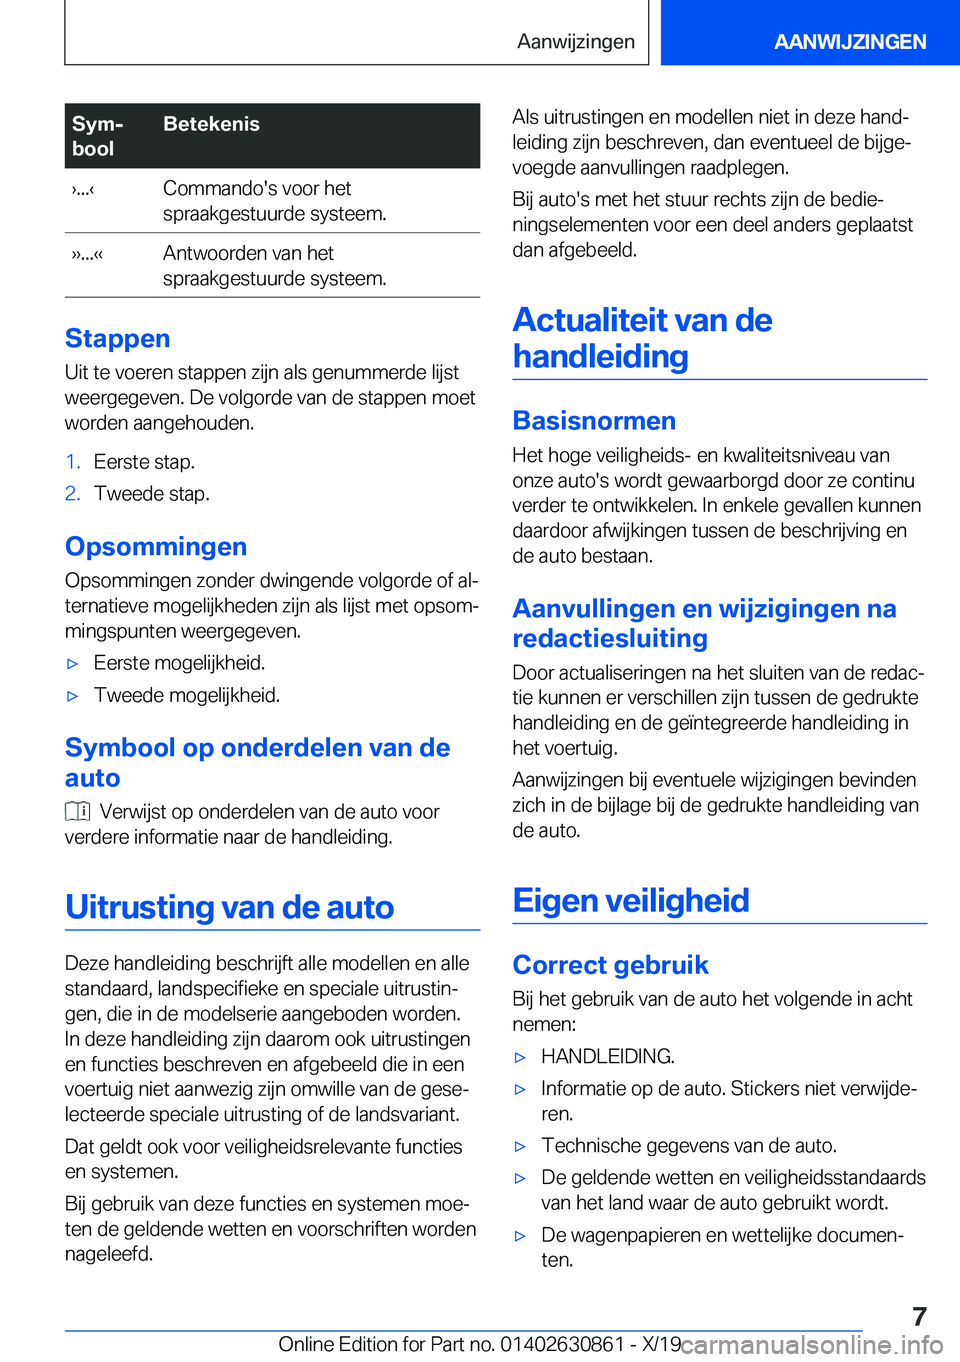 BMW 4 SERIES GRAN COUPE 2020  Instructieboekjes (in Dutch) �S�y�mj
�b�o�o�l�B�e�t�e�k�e�n�i�s